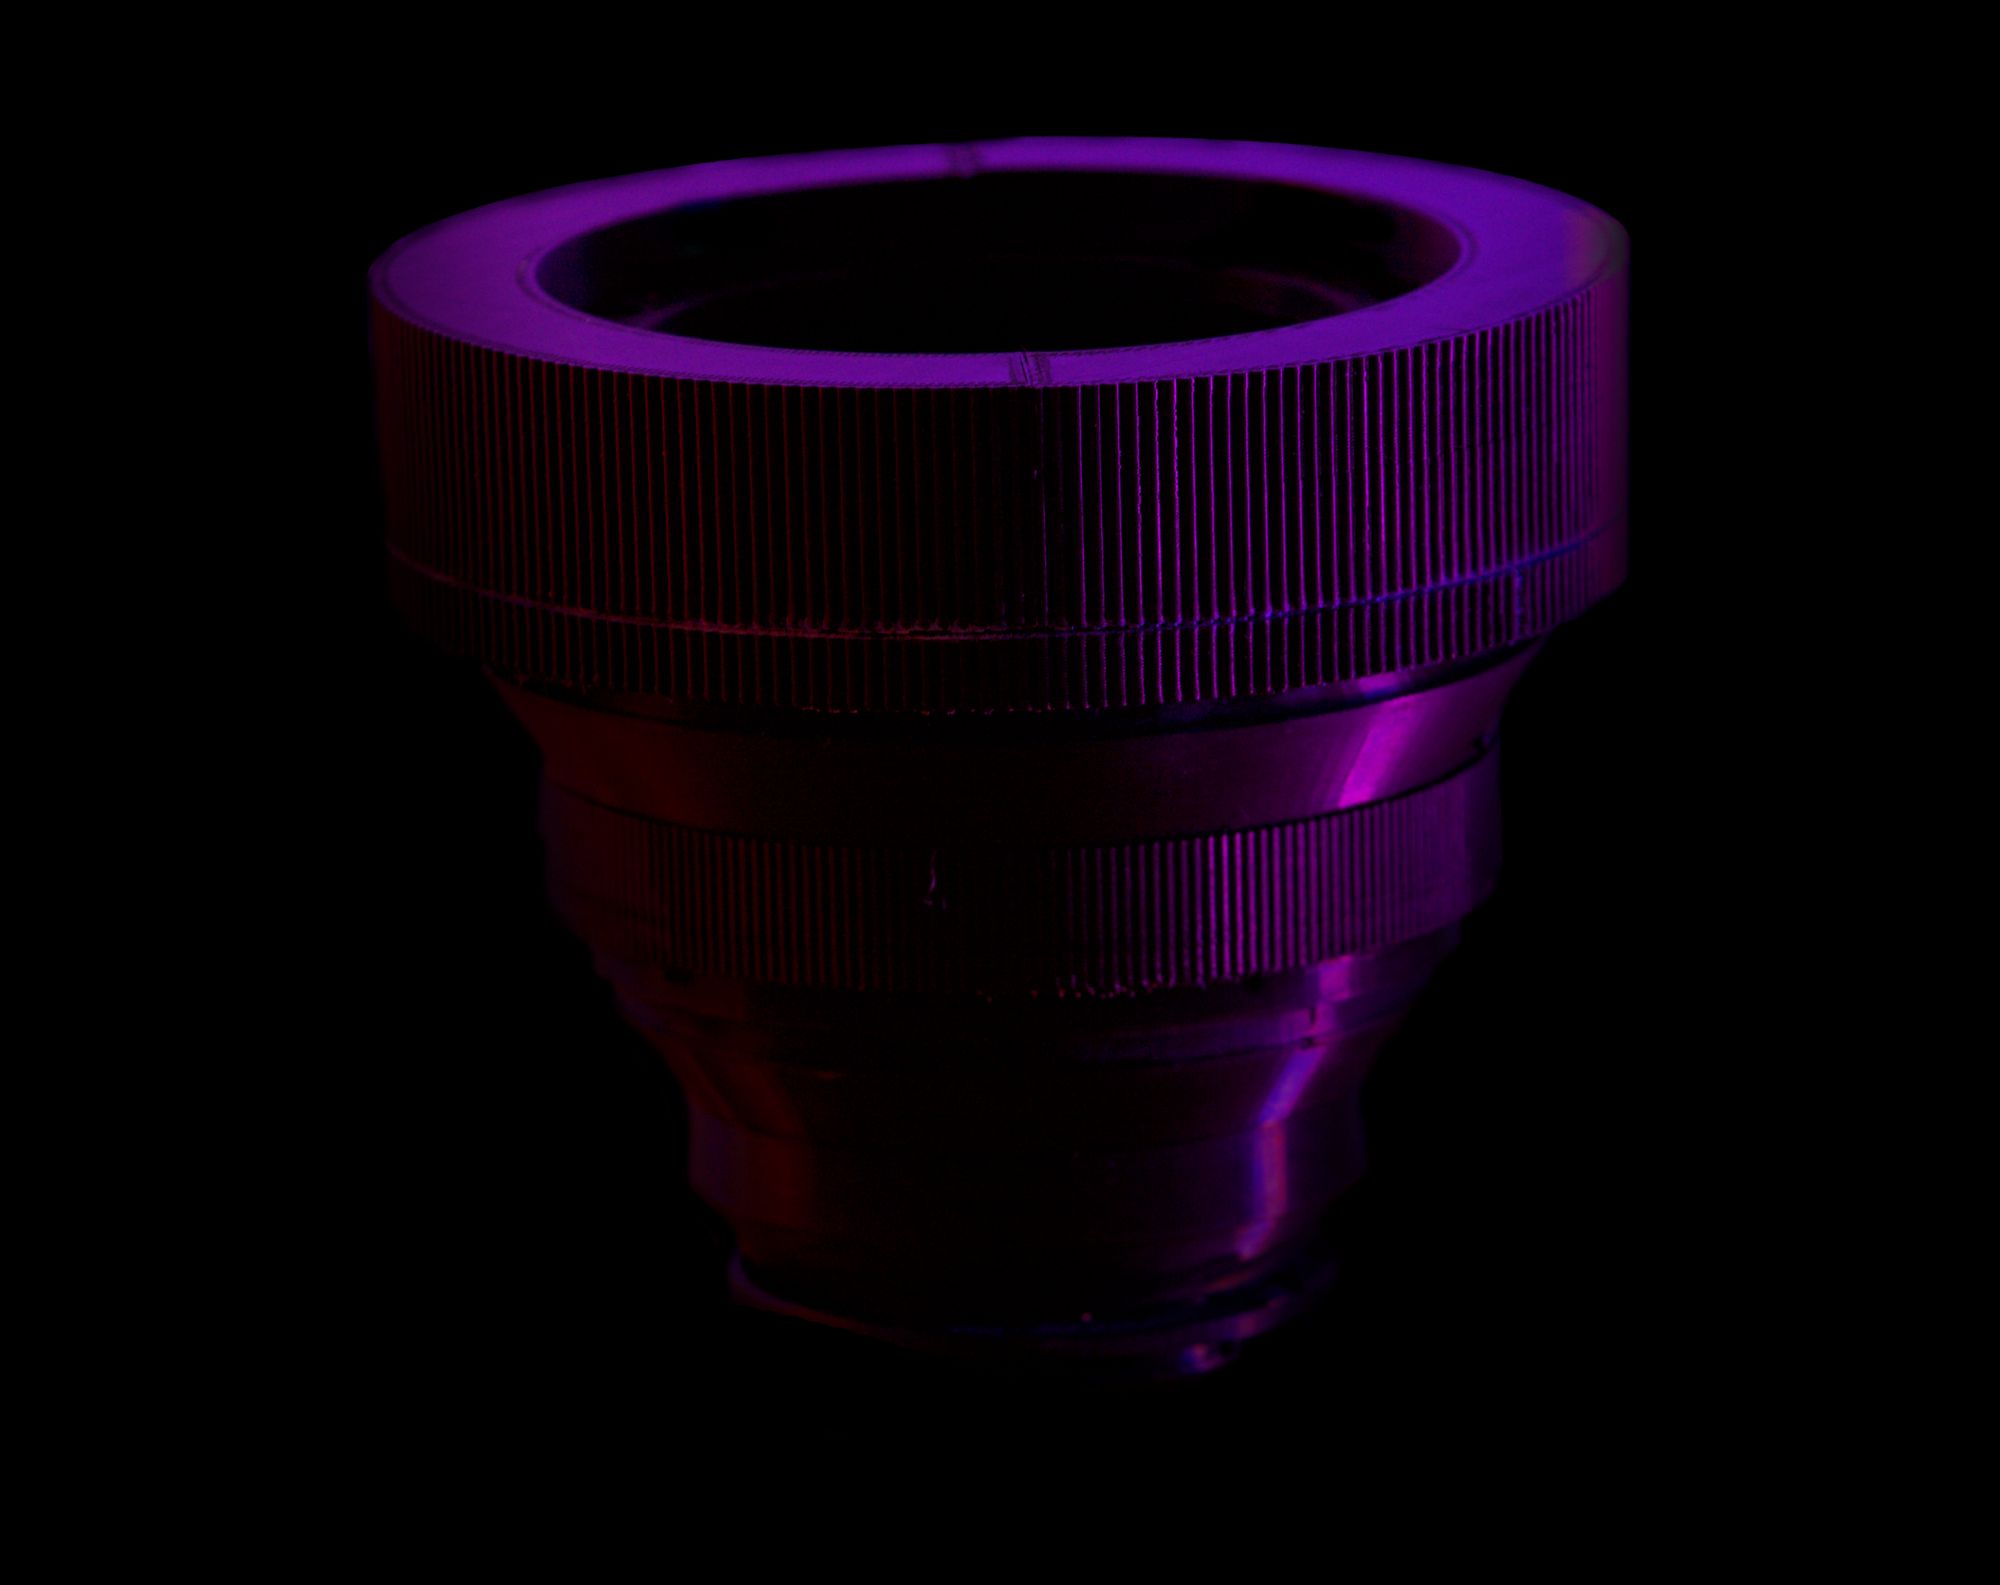 3D printed lens